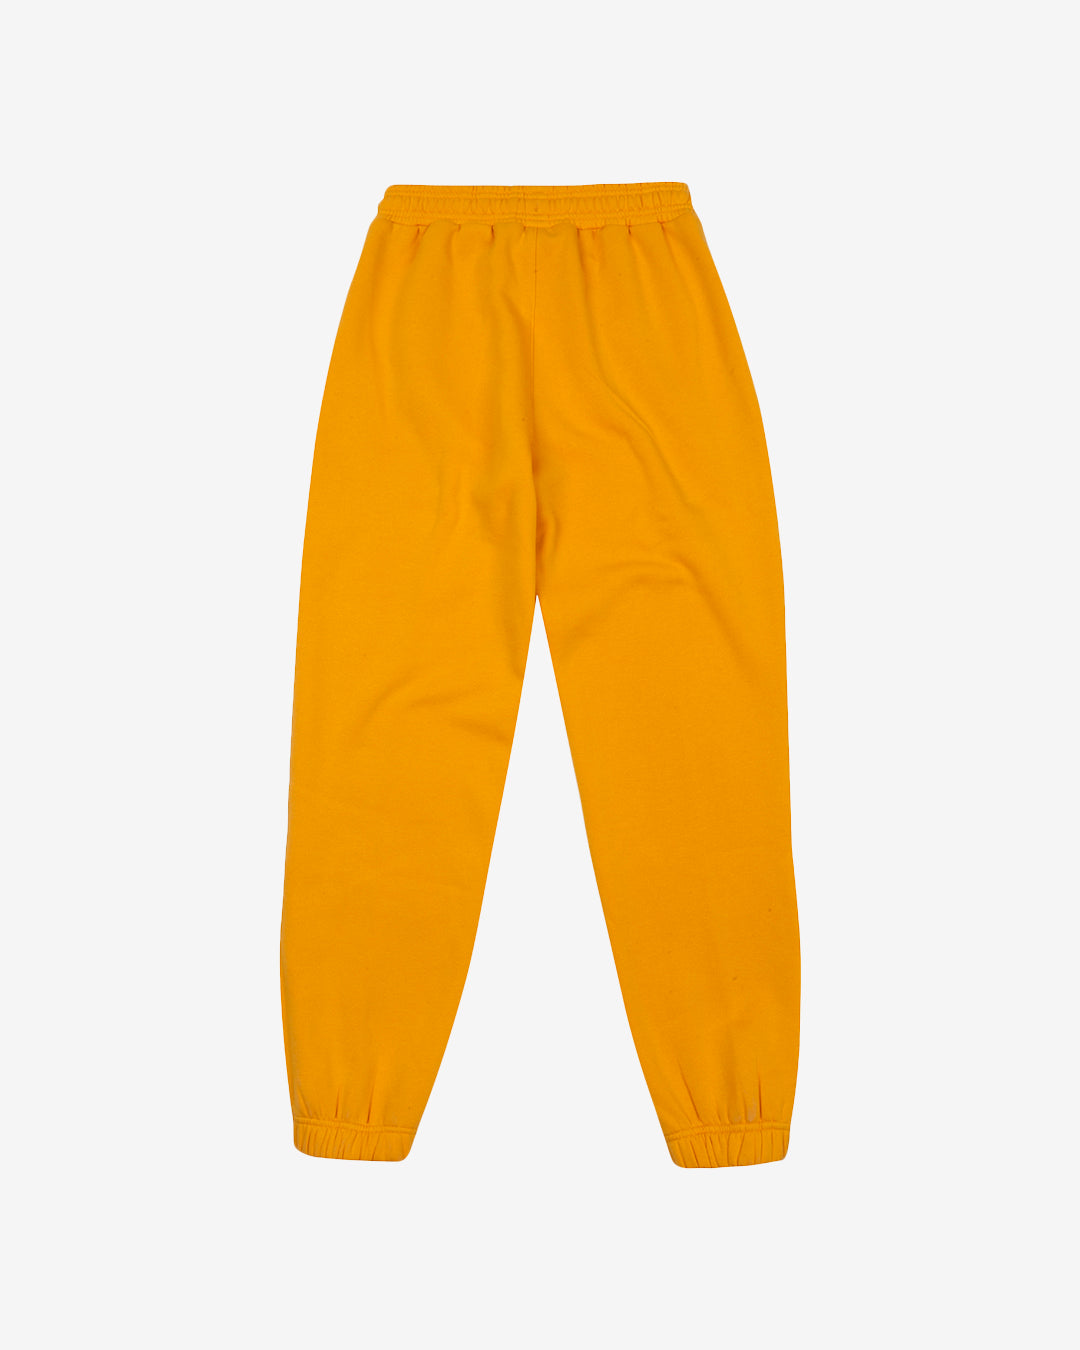 PFC: 002-4 - Women's Sweatpants - Amber Yellow